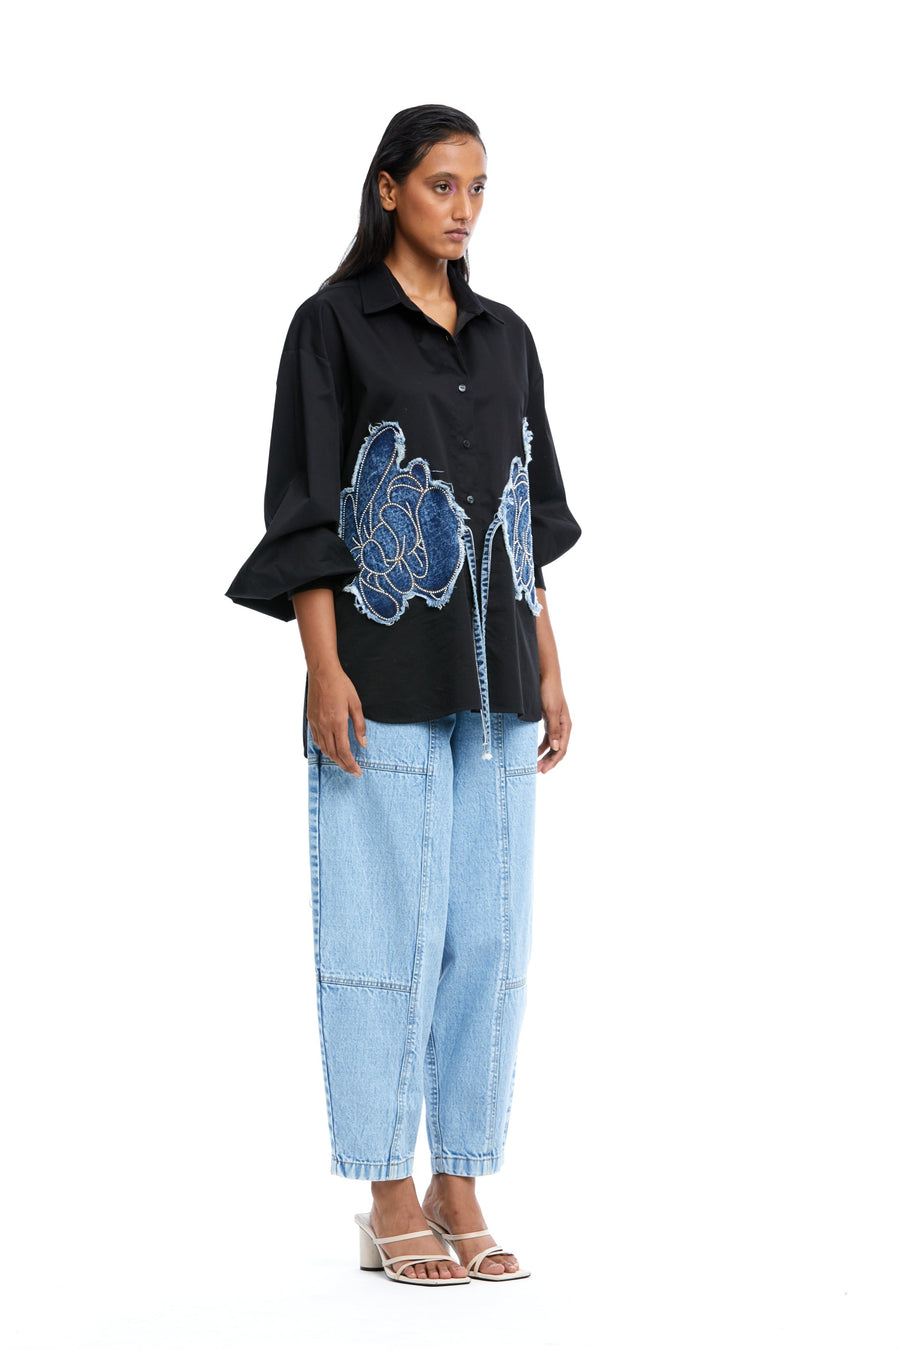 'Warped Vine' Denim Appliqué Shirt - Kanika Goyal Label